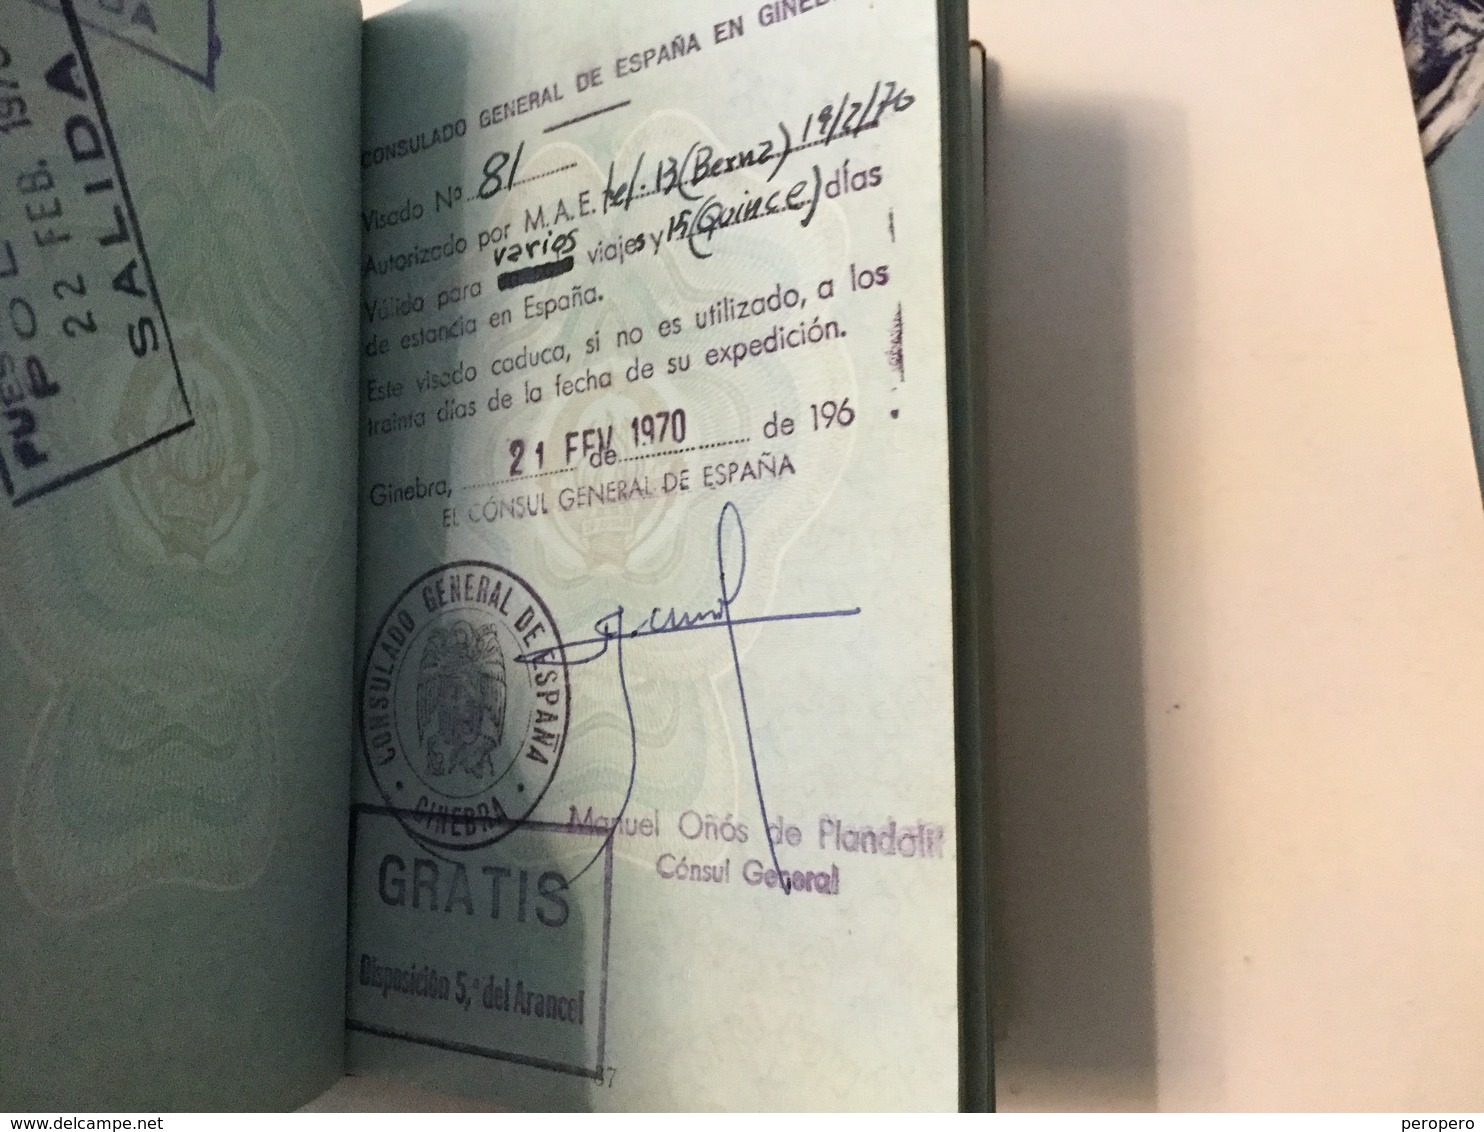 PASSPORT   REISEPASS  PASSAPORTO   PASSEPORT  DIPLOMATIQUE 1967. VISA TO:SUISSE,IRAN,USA,FRANCE,ESPANA